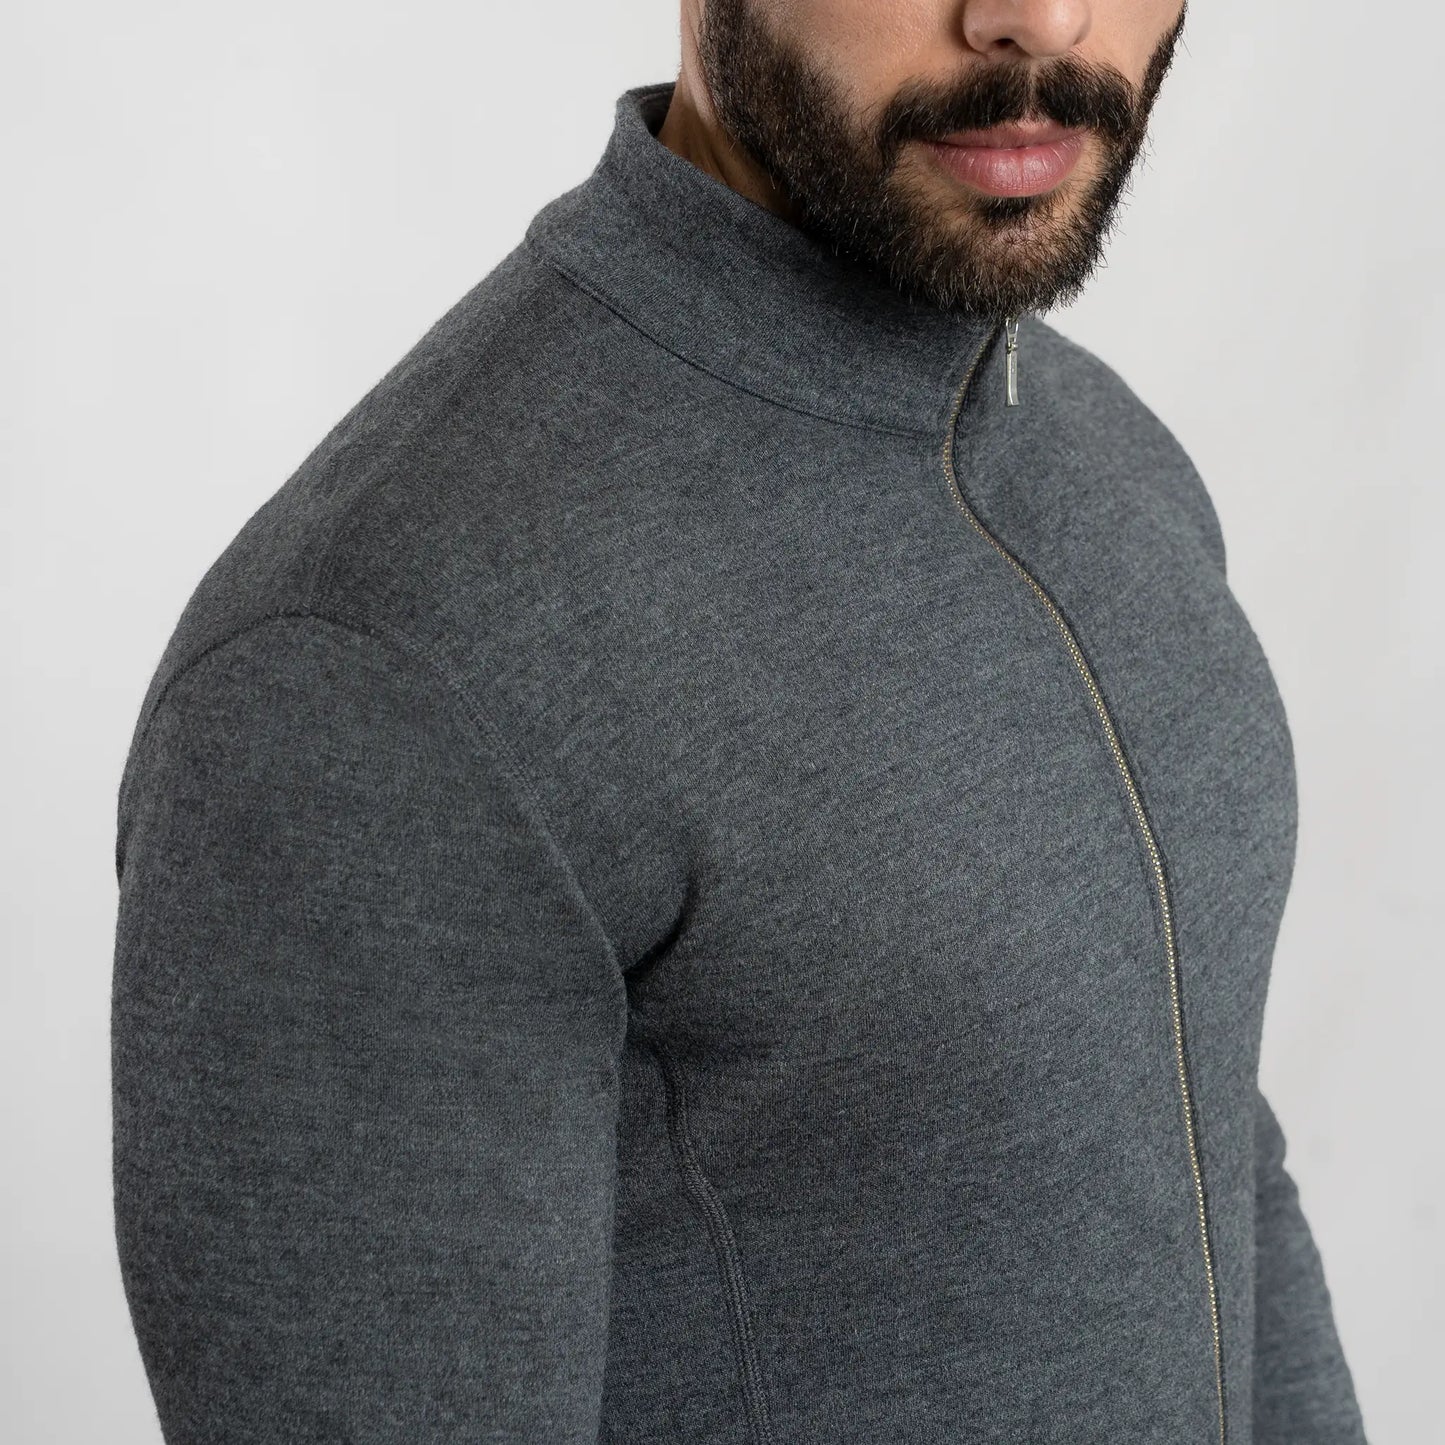 mens antiodor jacket full zip color gray